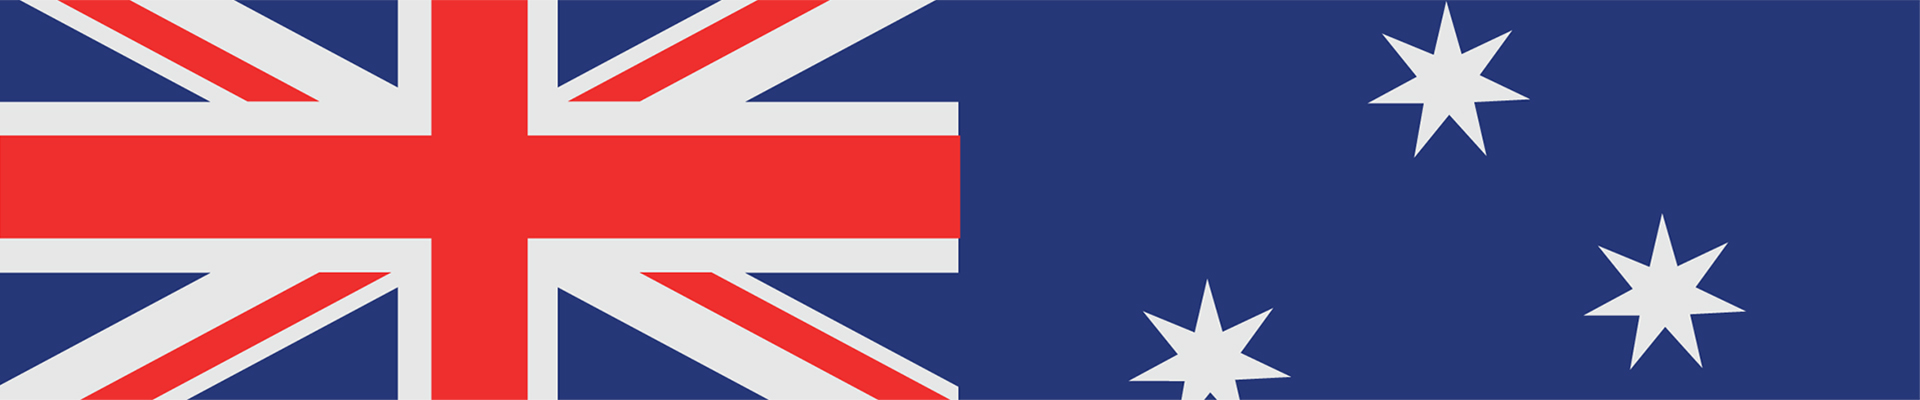 Alcaraz vs Djokovic en direct – drapeau Australie